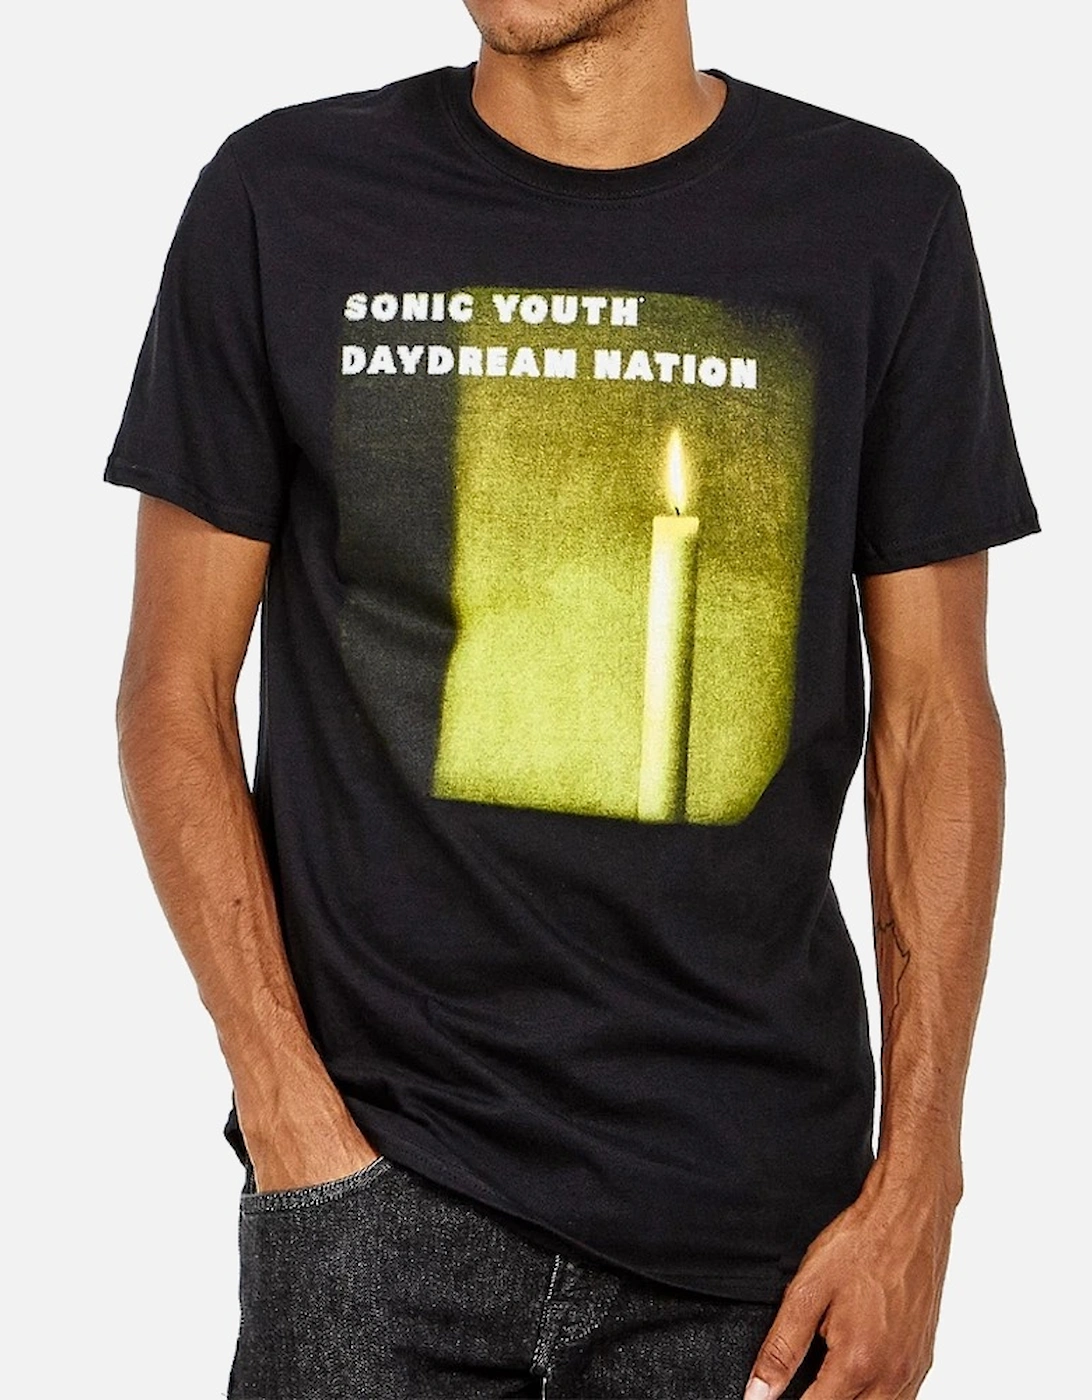 Unisex Adult Daydream Nation T-Shirt